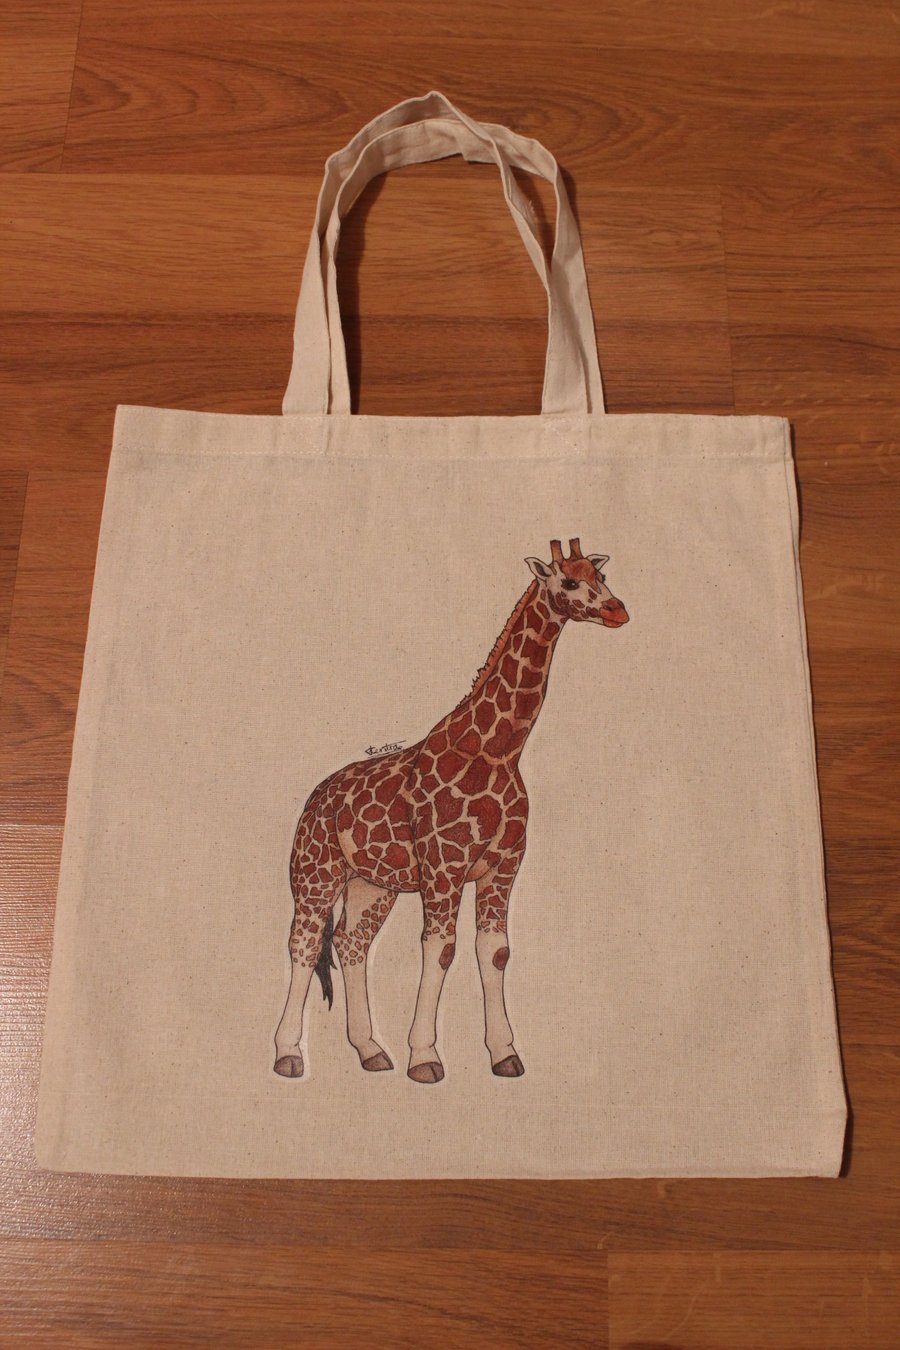 SALE ITEM - Giraffe Eco Fabric Reusable Shopping Tote Bag